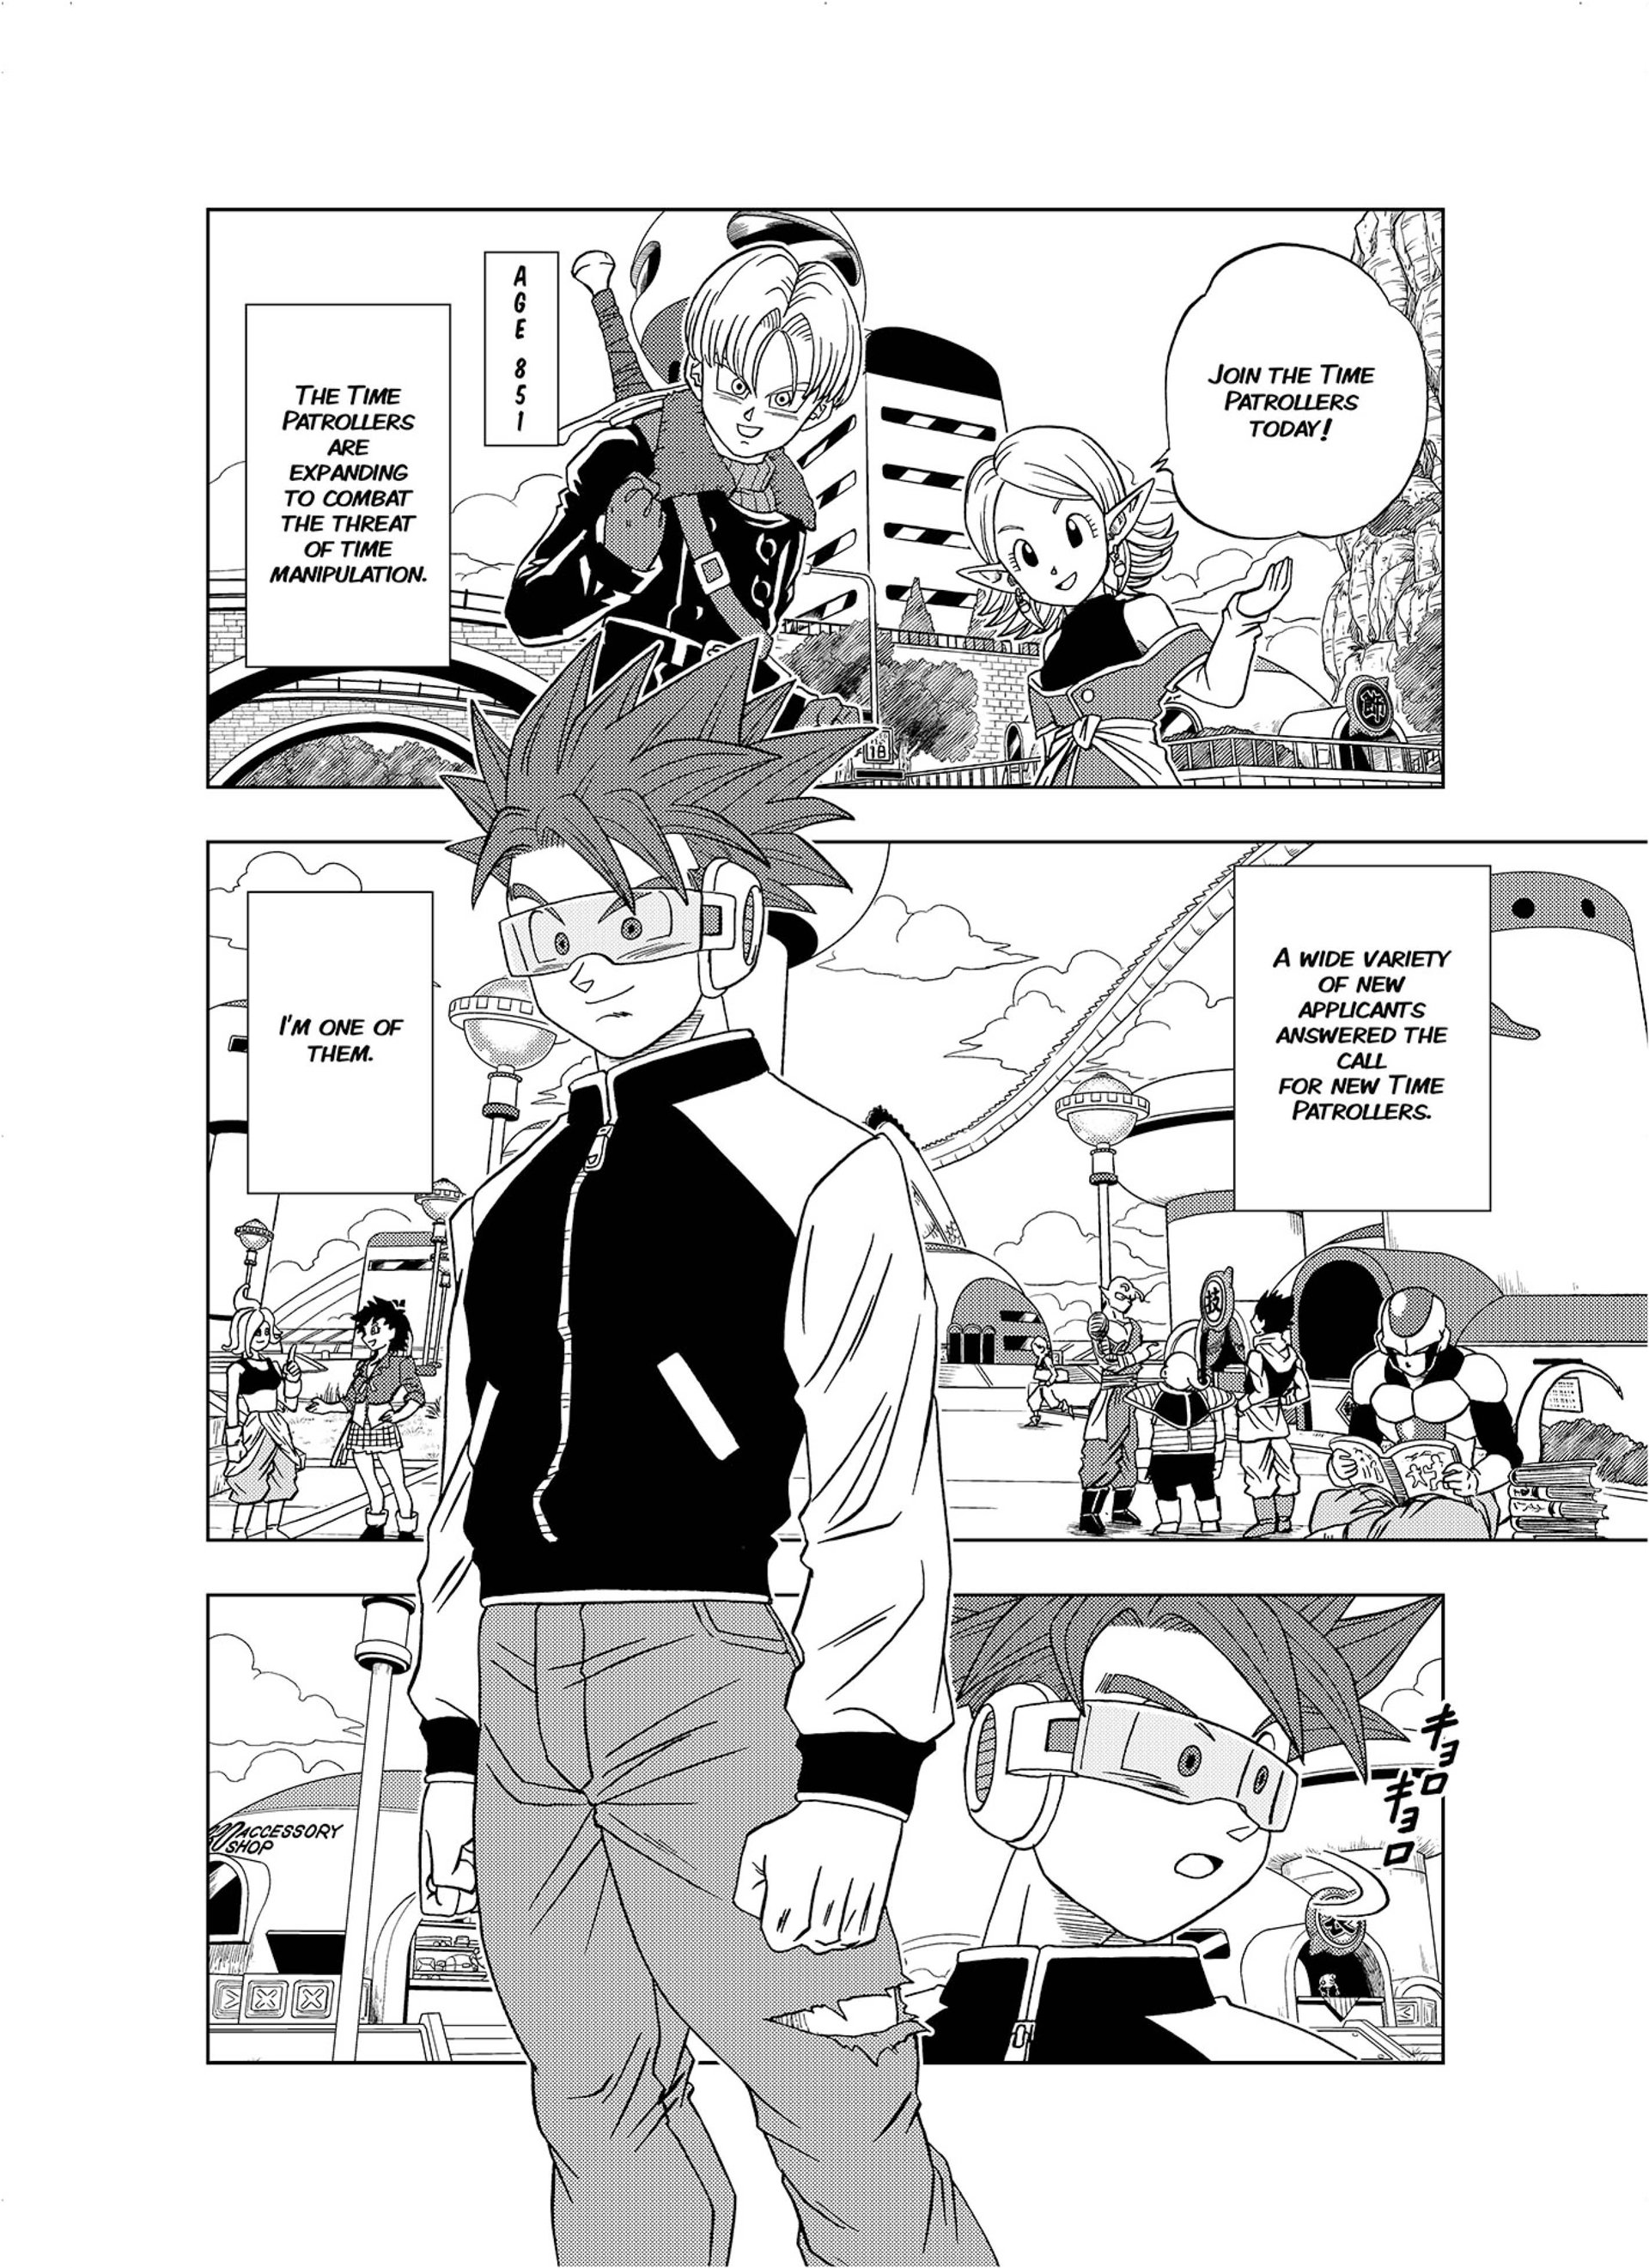 Xenoverse 2 Manga Page 1.jpg